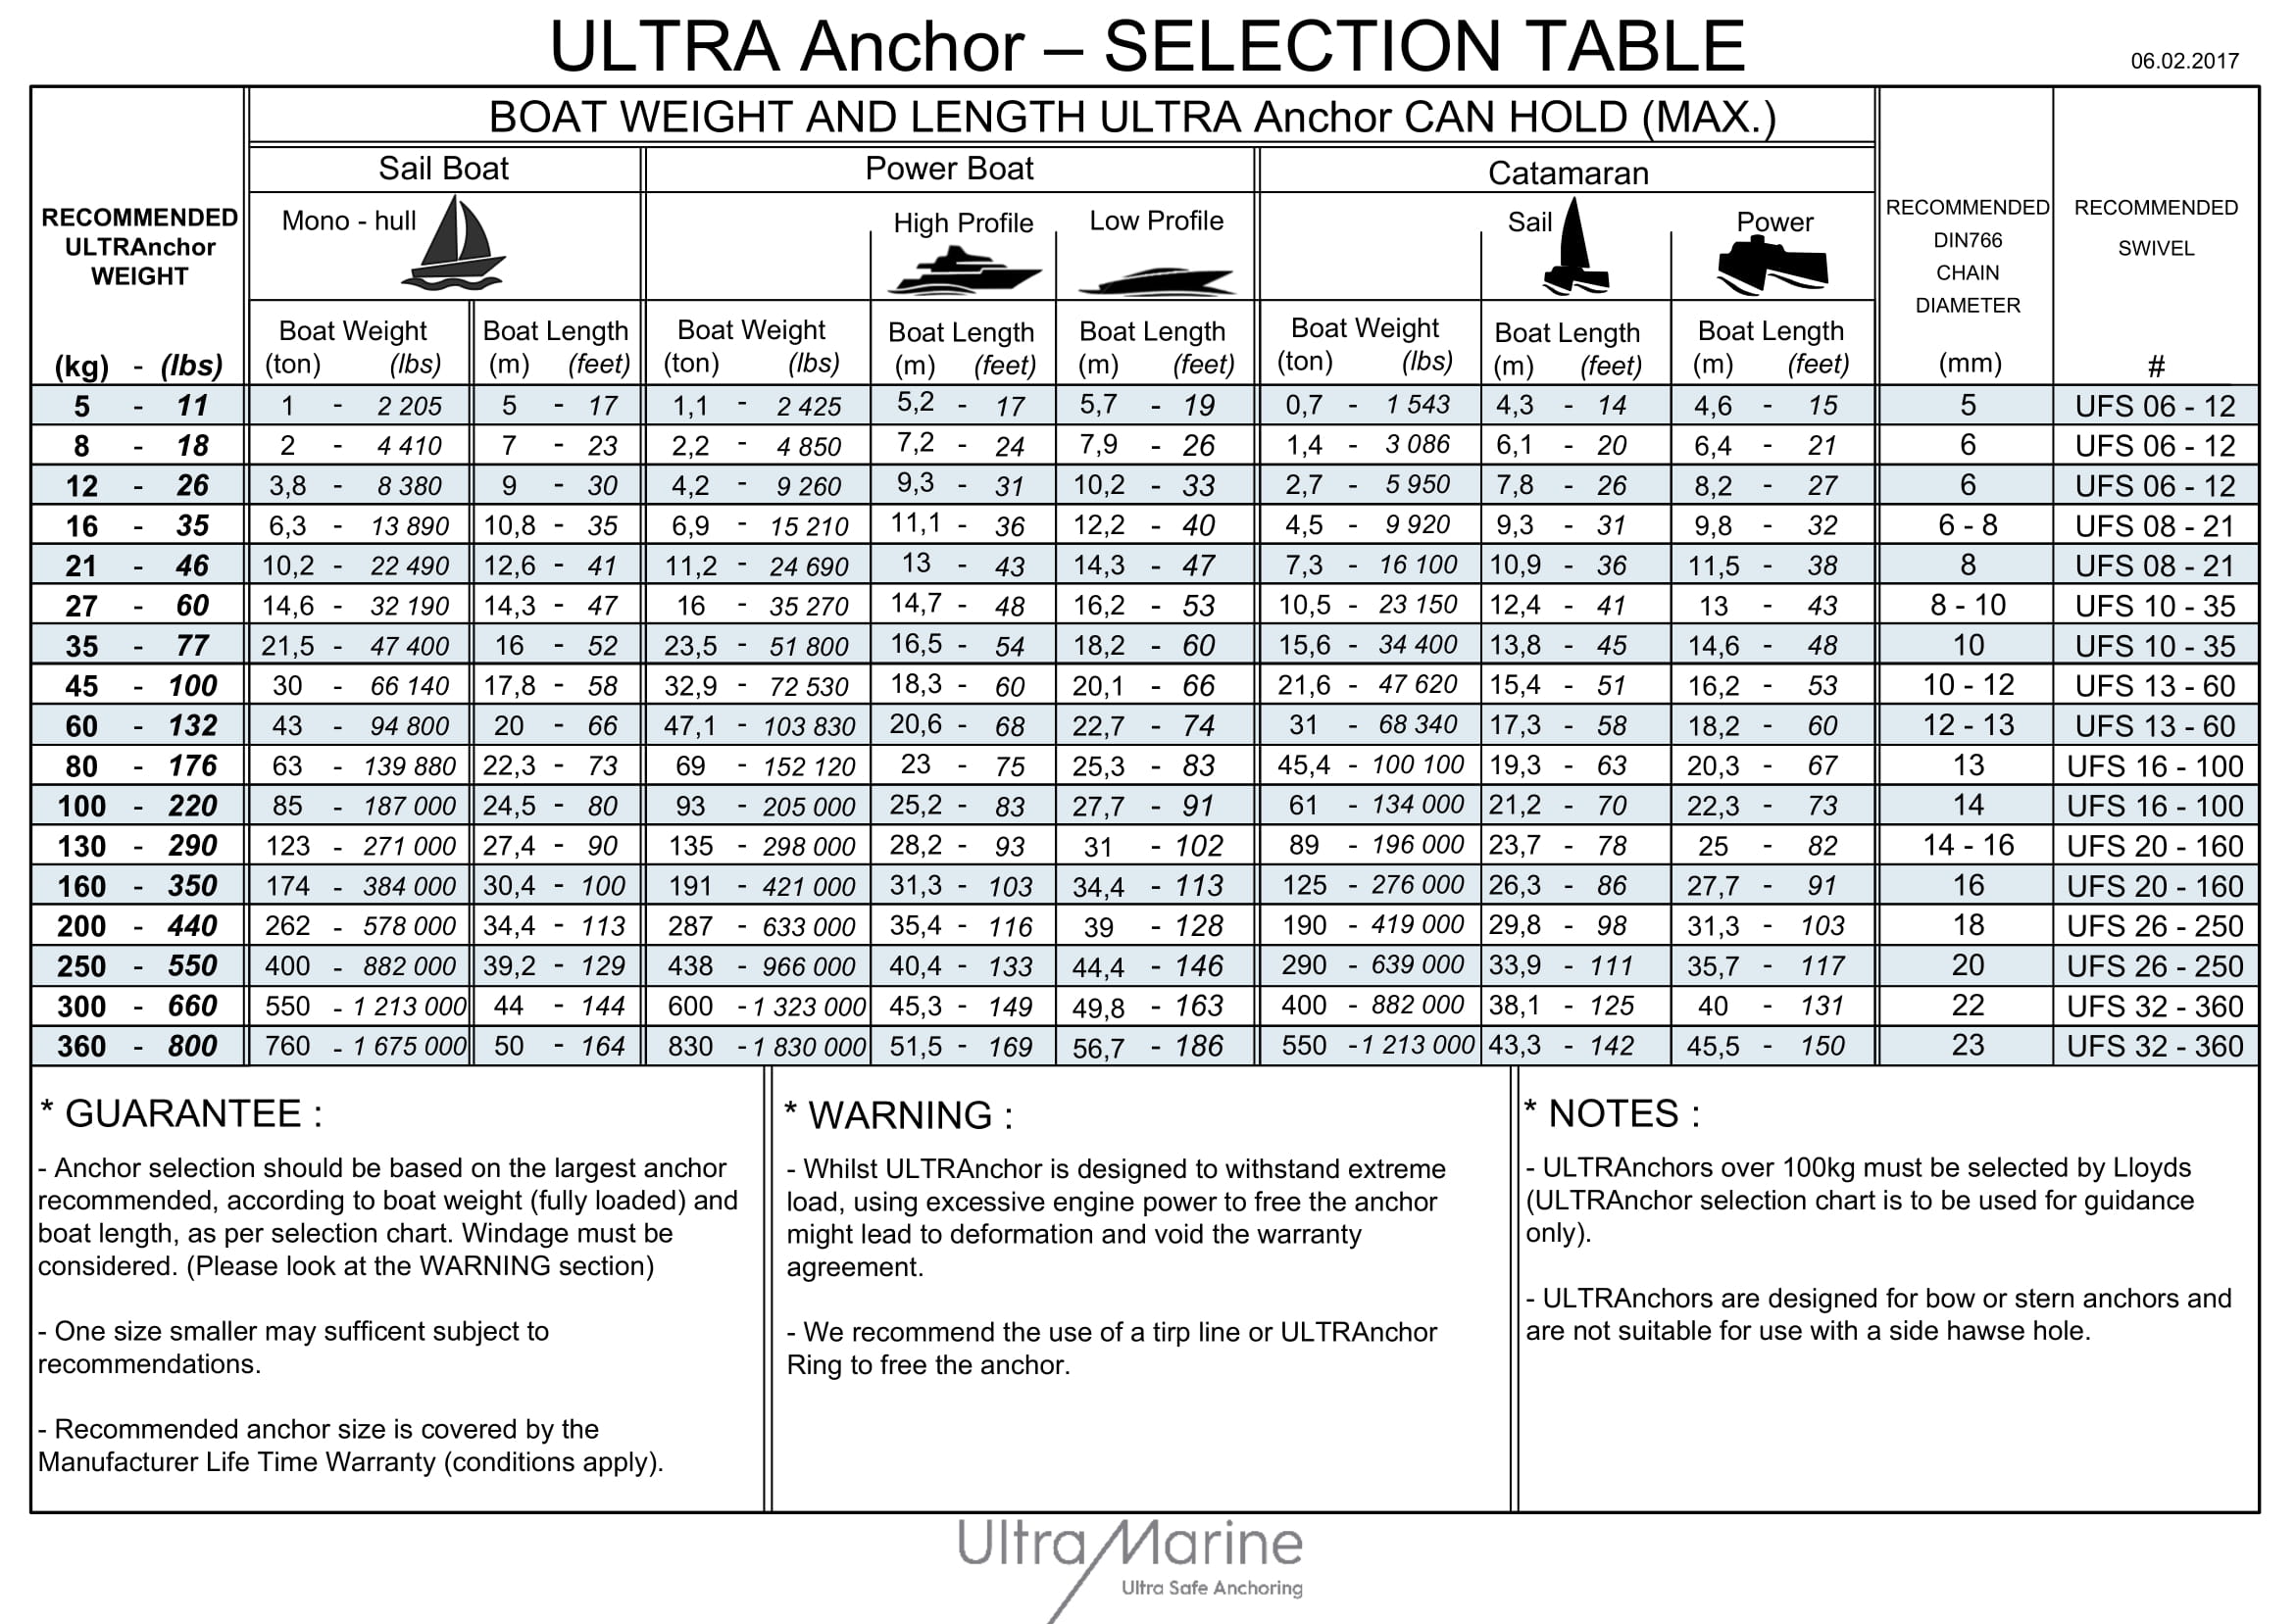 ultra anchor size chart - Part.tscoreks.org